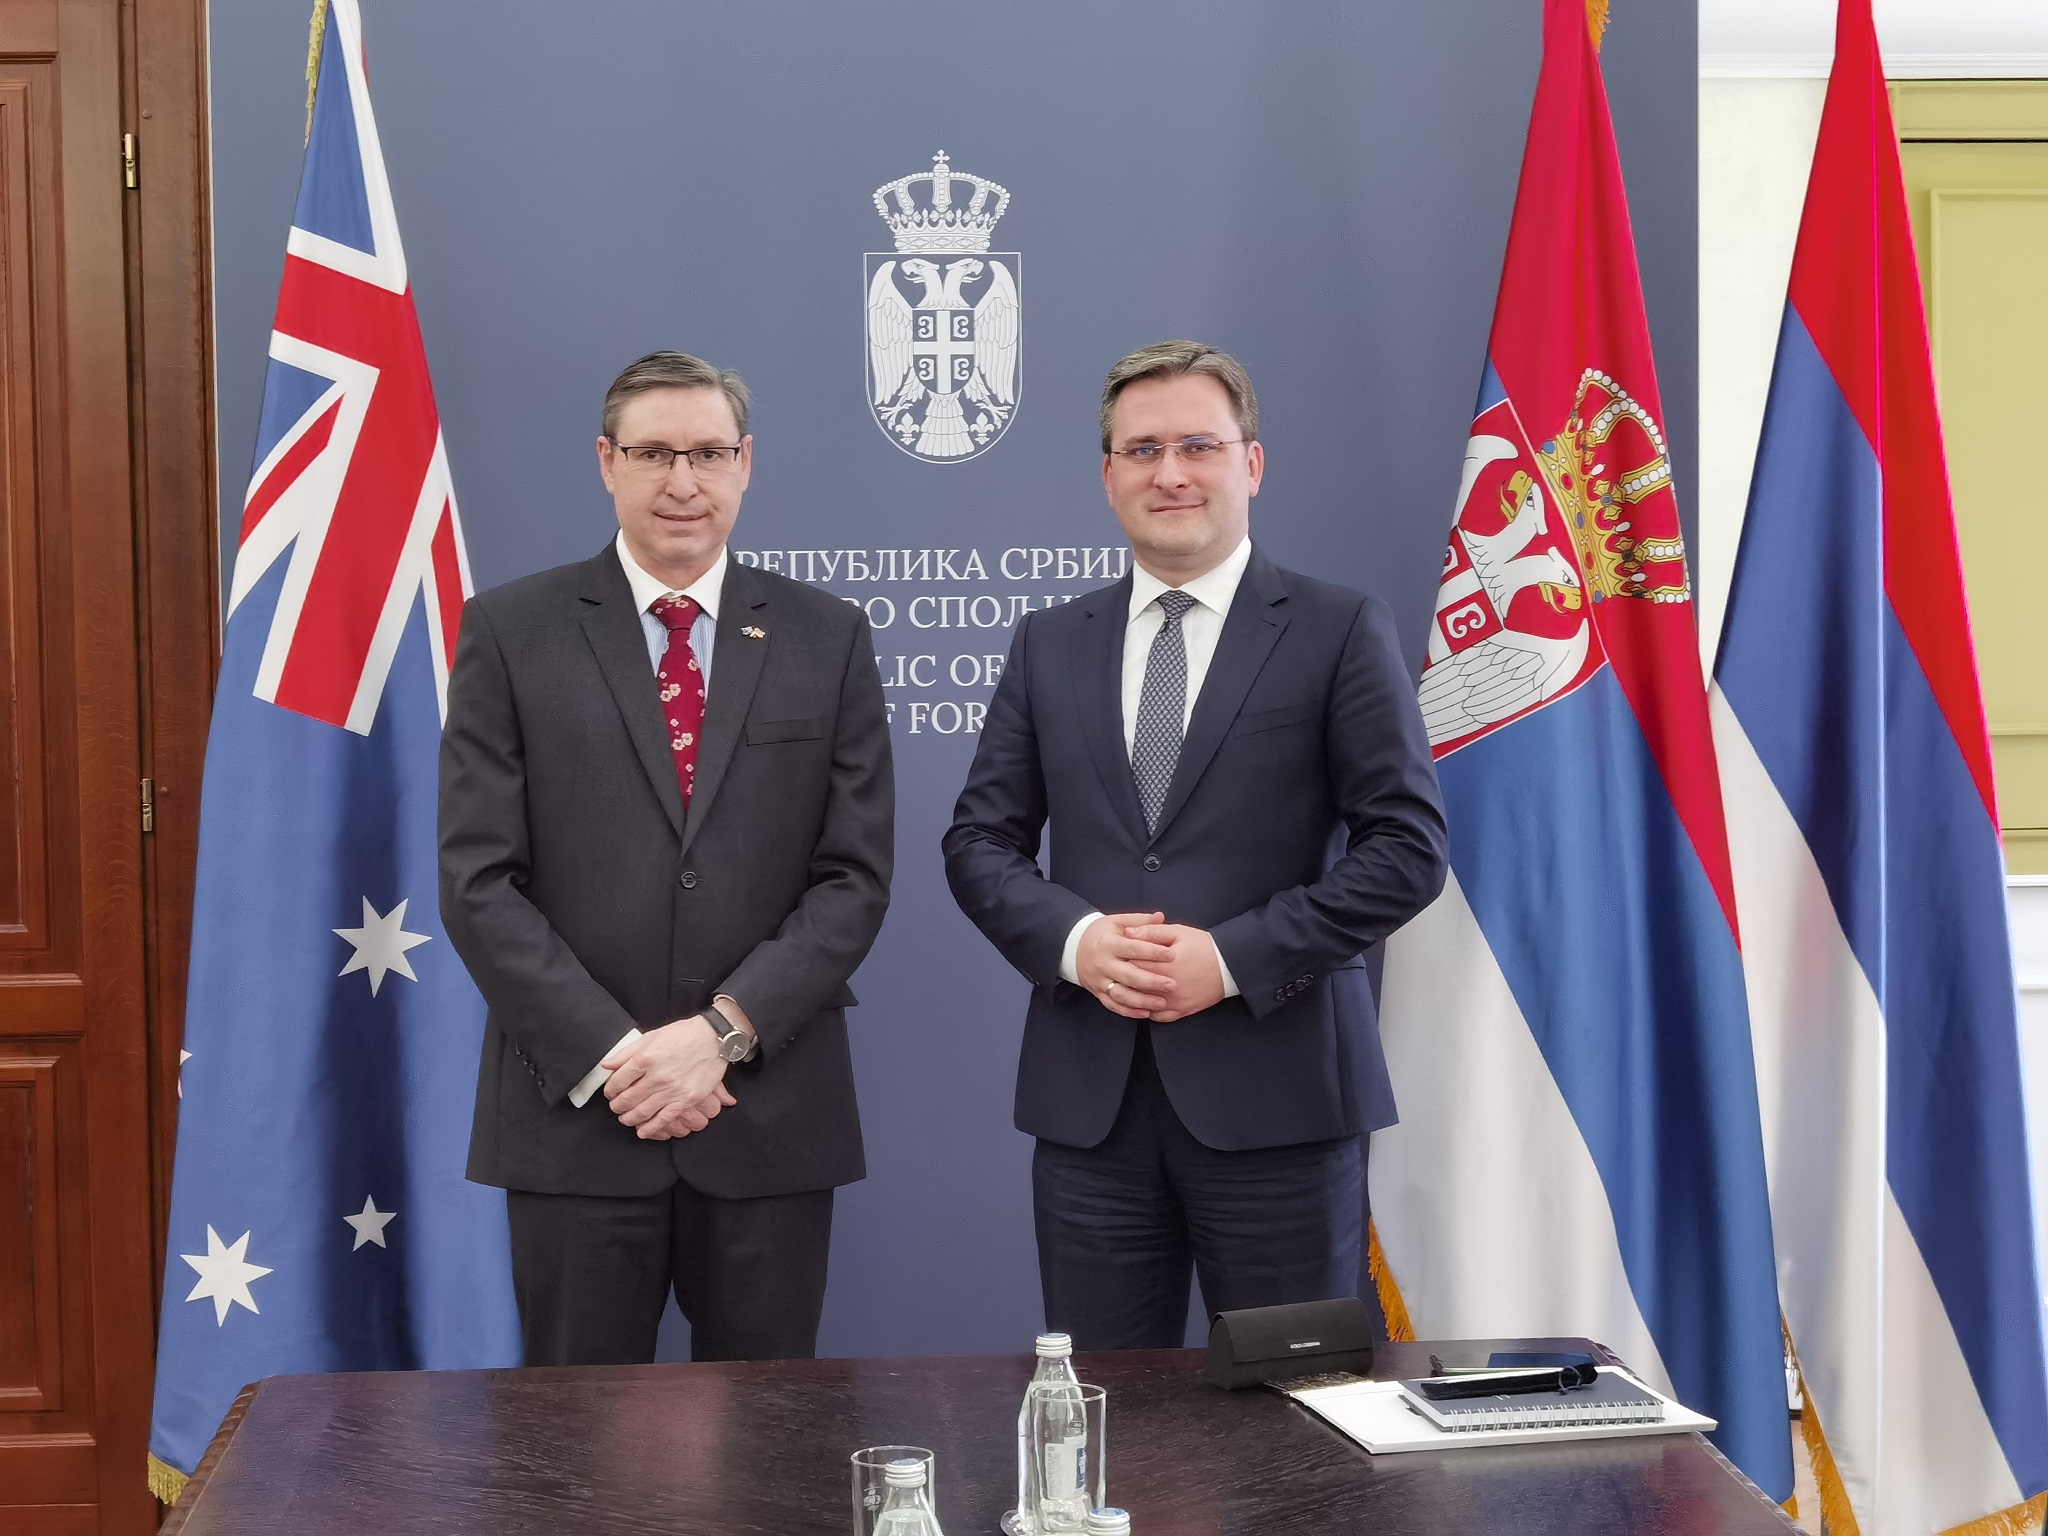 Landsdækkende Smidighed rangle Embassy of The Republic of Serbia in Australia